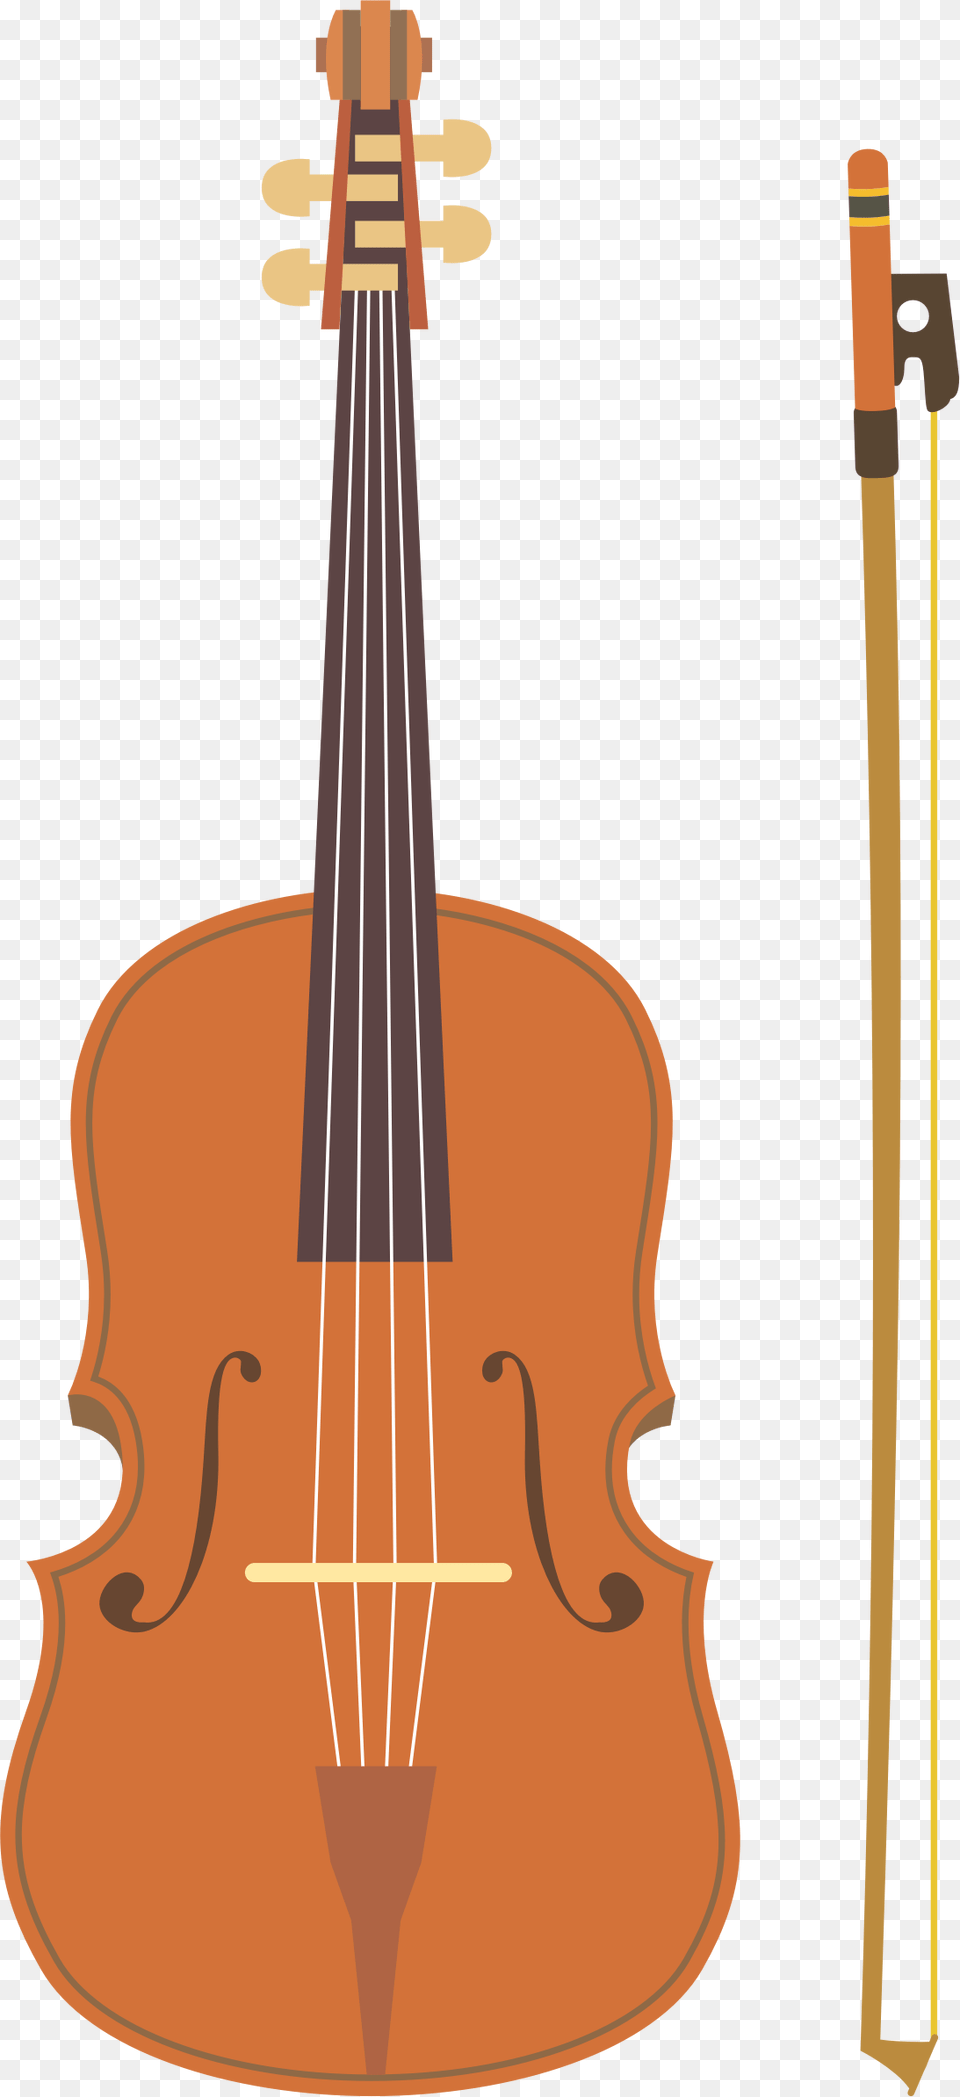 Big Musical Instrument, Violin, Cello Png Image